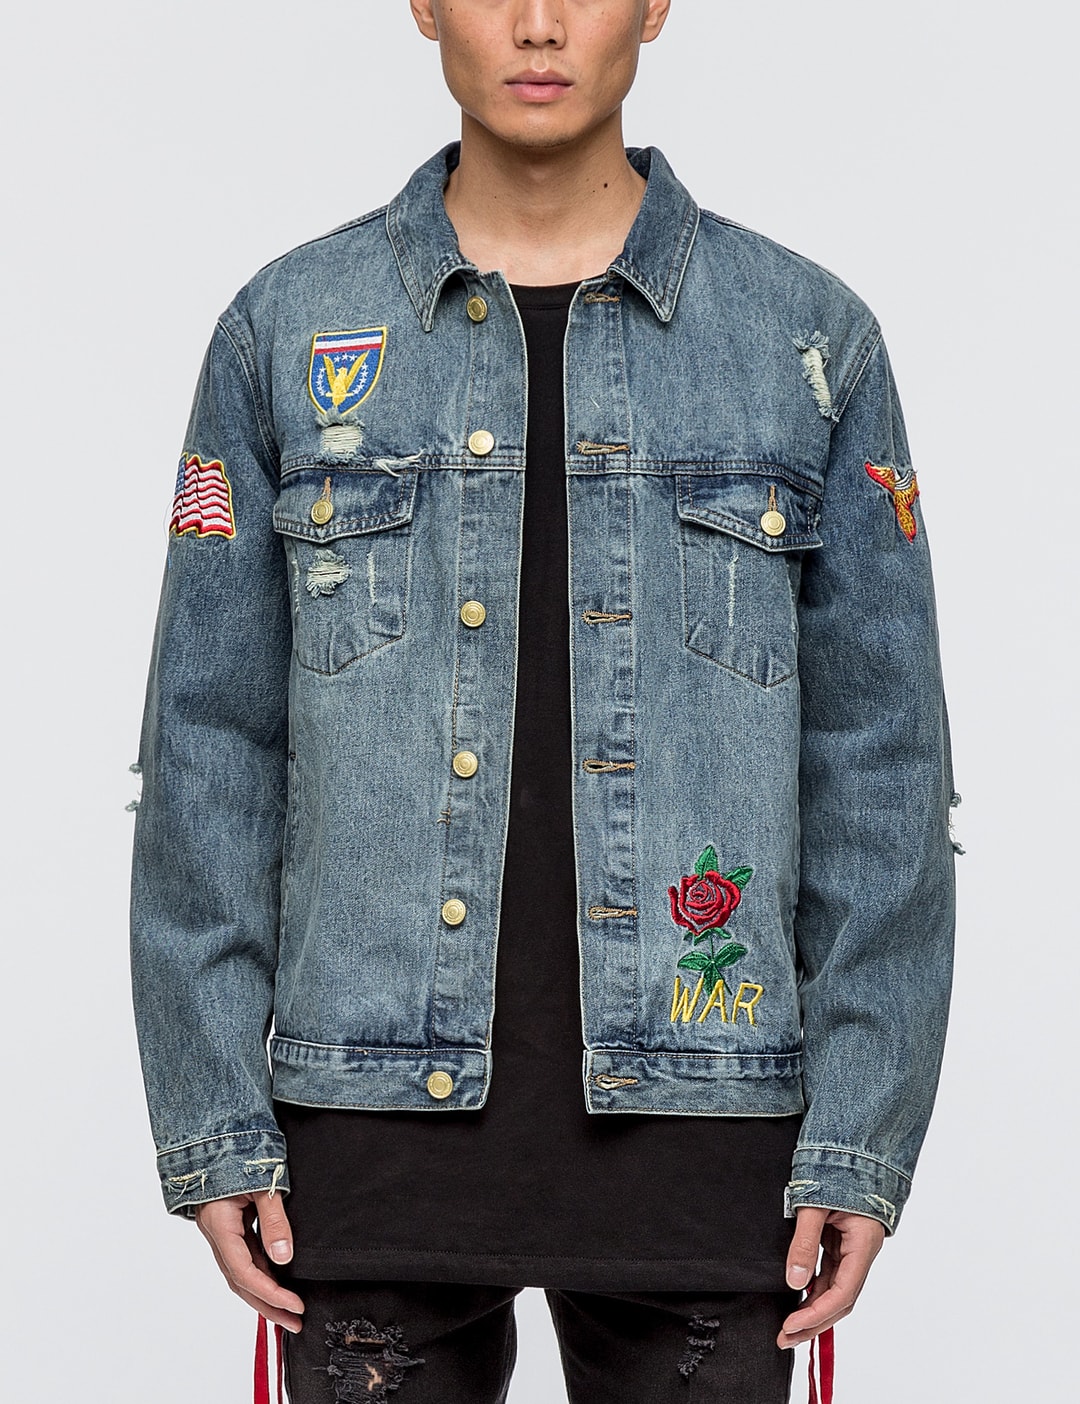 Personalised Name Patch Denim Jacket – Rose + Moo